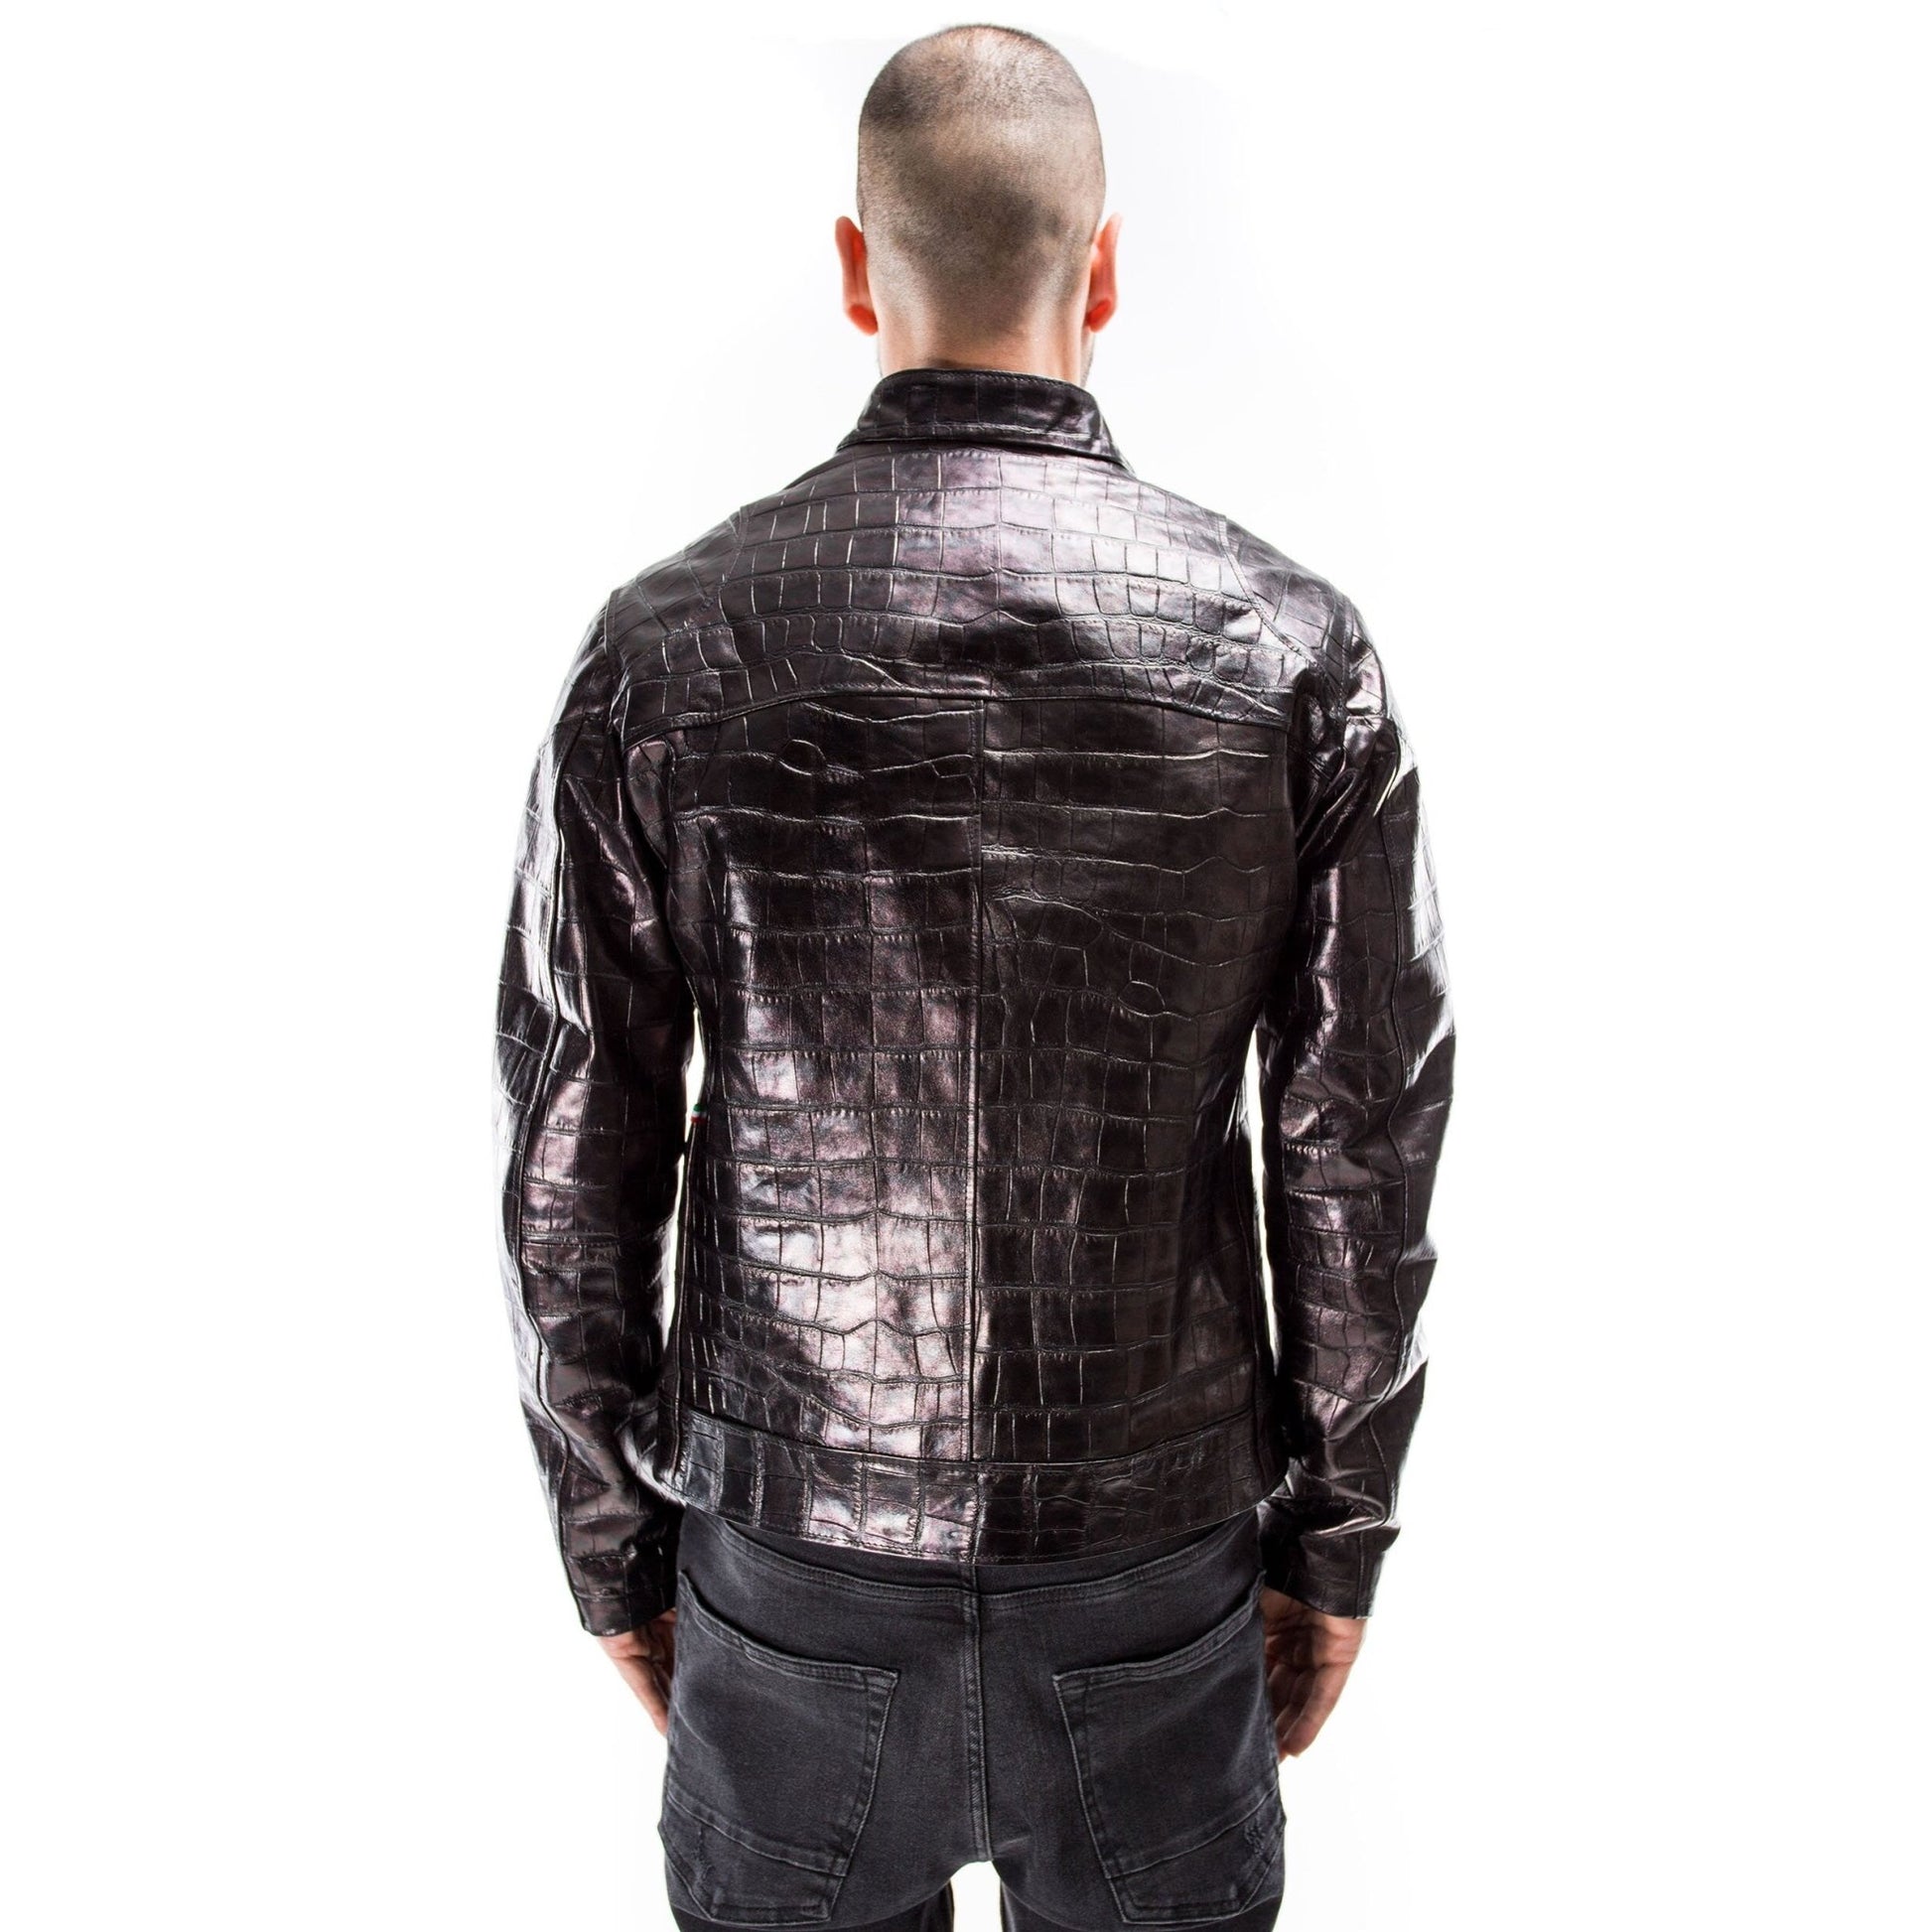 Mens Genuine Lambskin Leather Jacket Black Slim fit Biker Stylish jacket  Coat